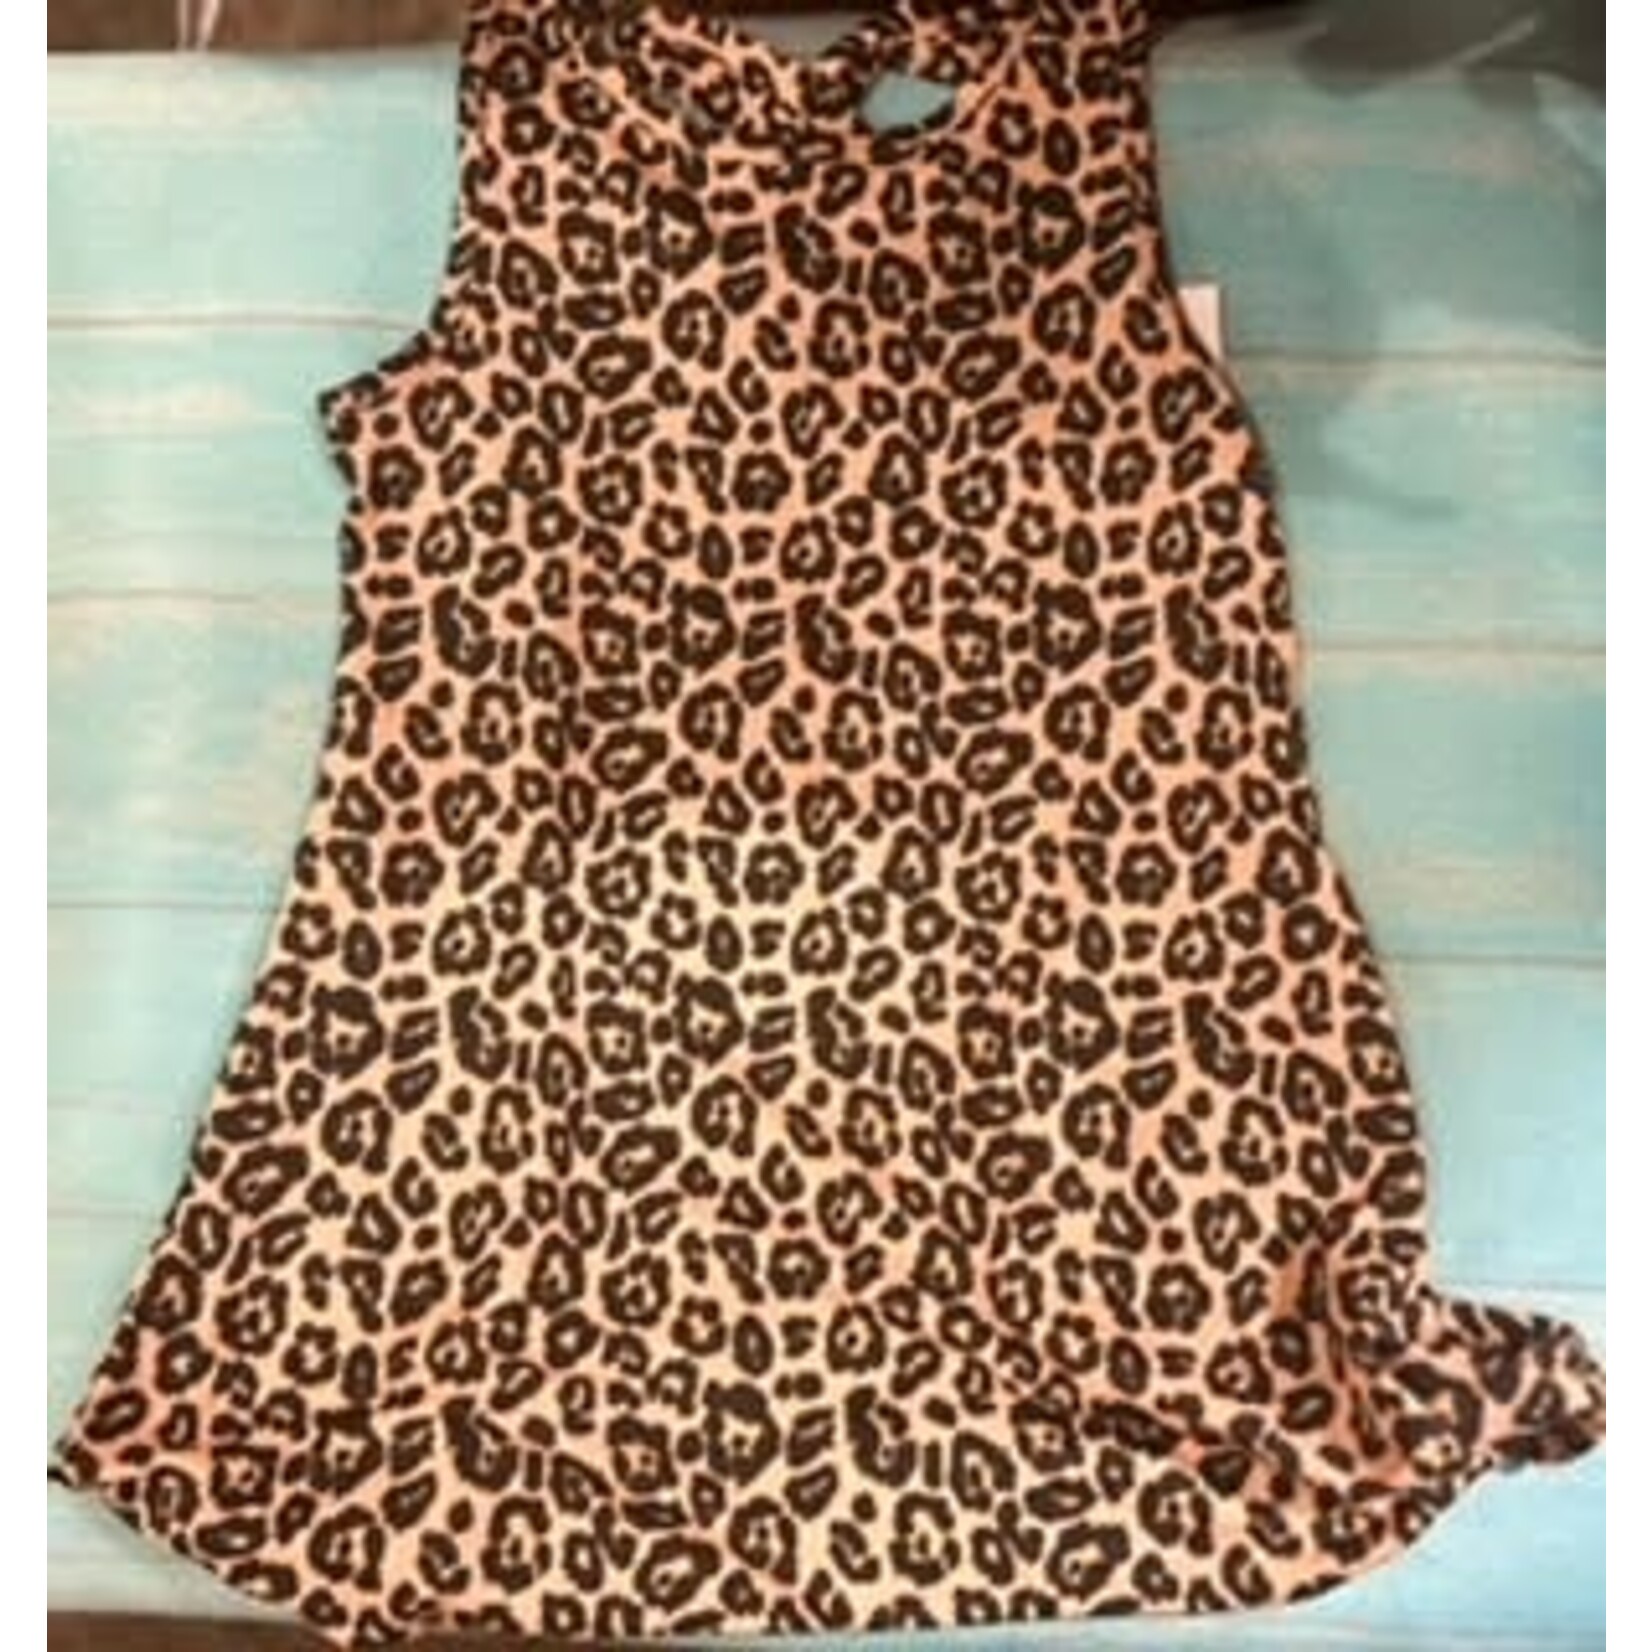 Simply Southern Simply Southern Youth Cheetah Print Dress